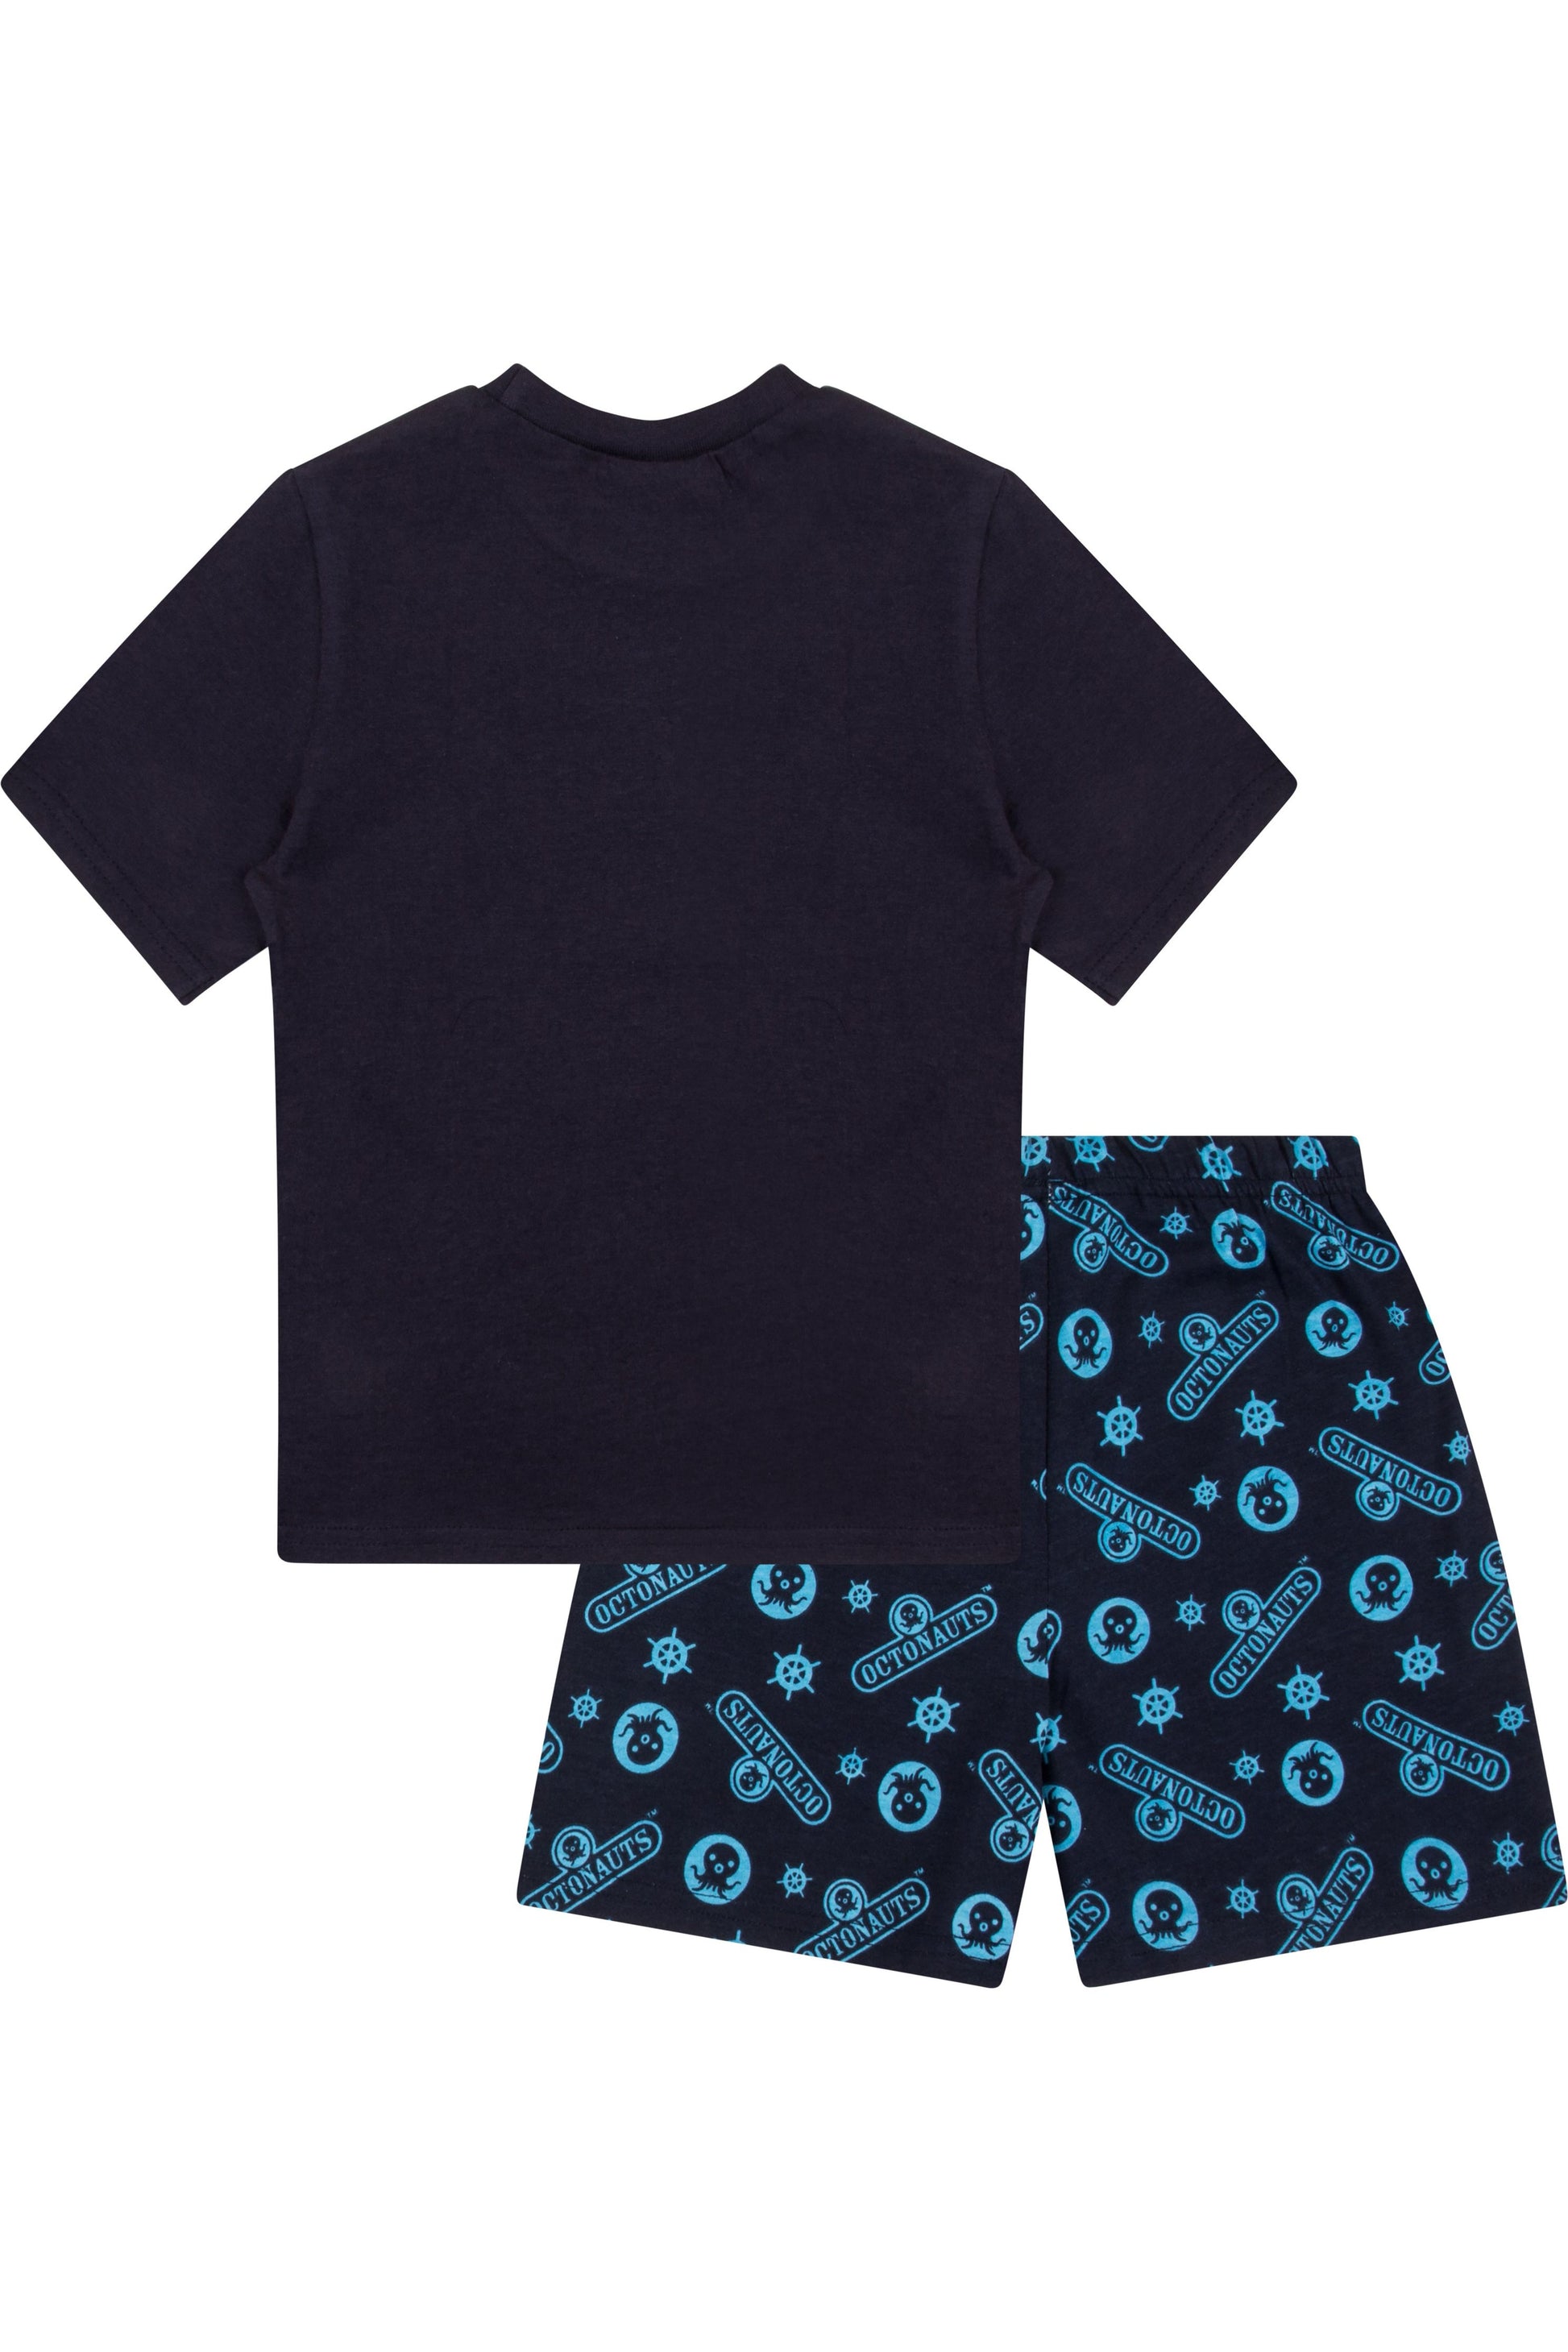 Boys Octonauts Short Pyjamas - Pyjamas.com